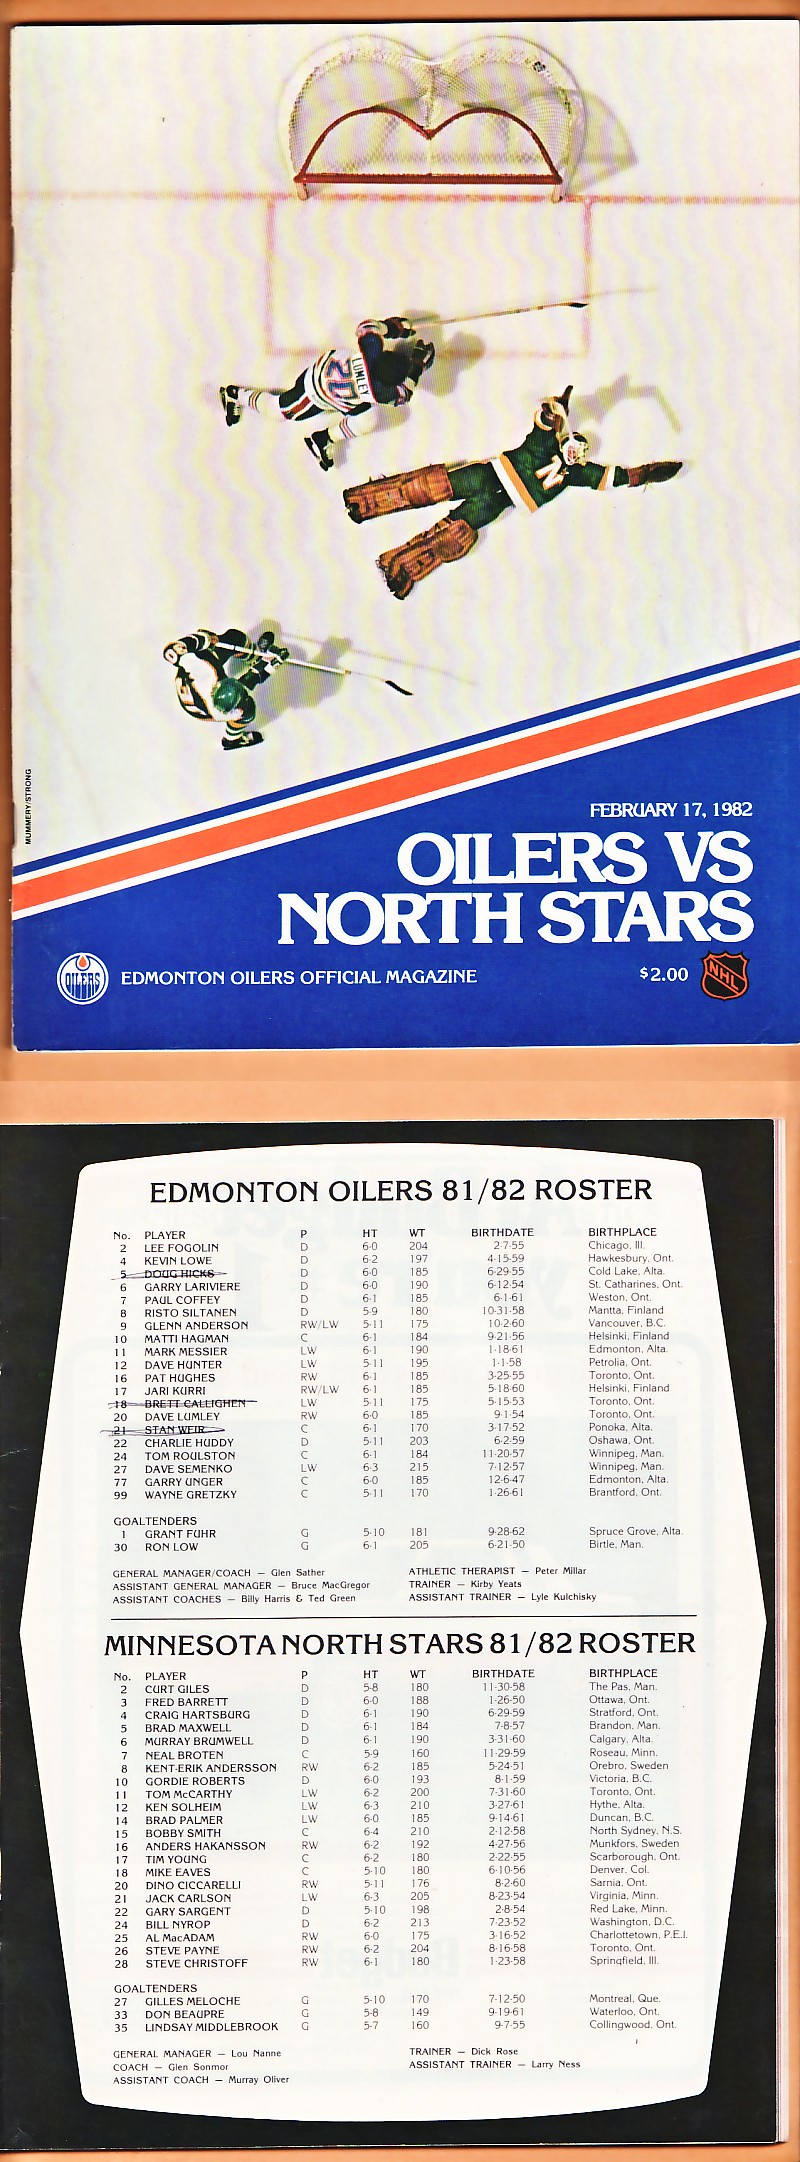 1982 EDMONTON OILERS VS MINNESOTA NORTH STARS PROGRAM photo